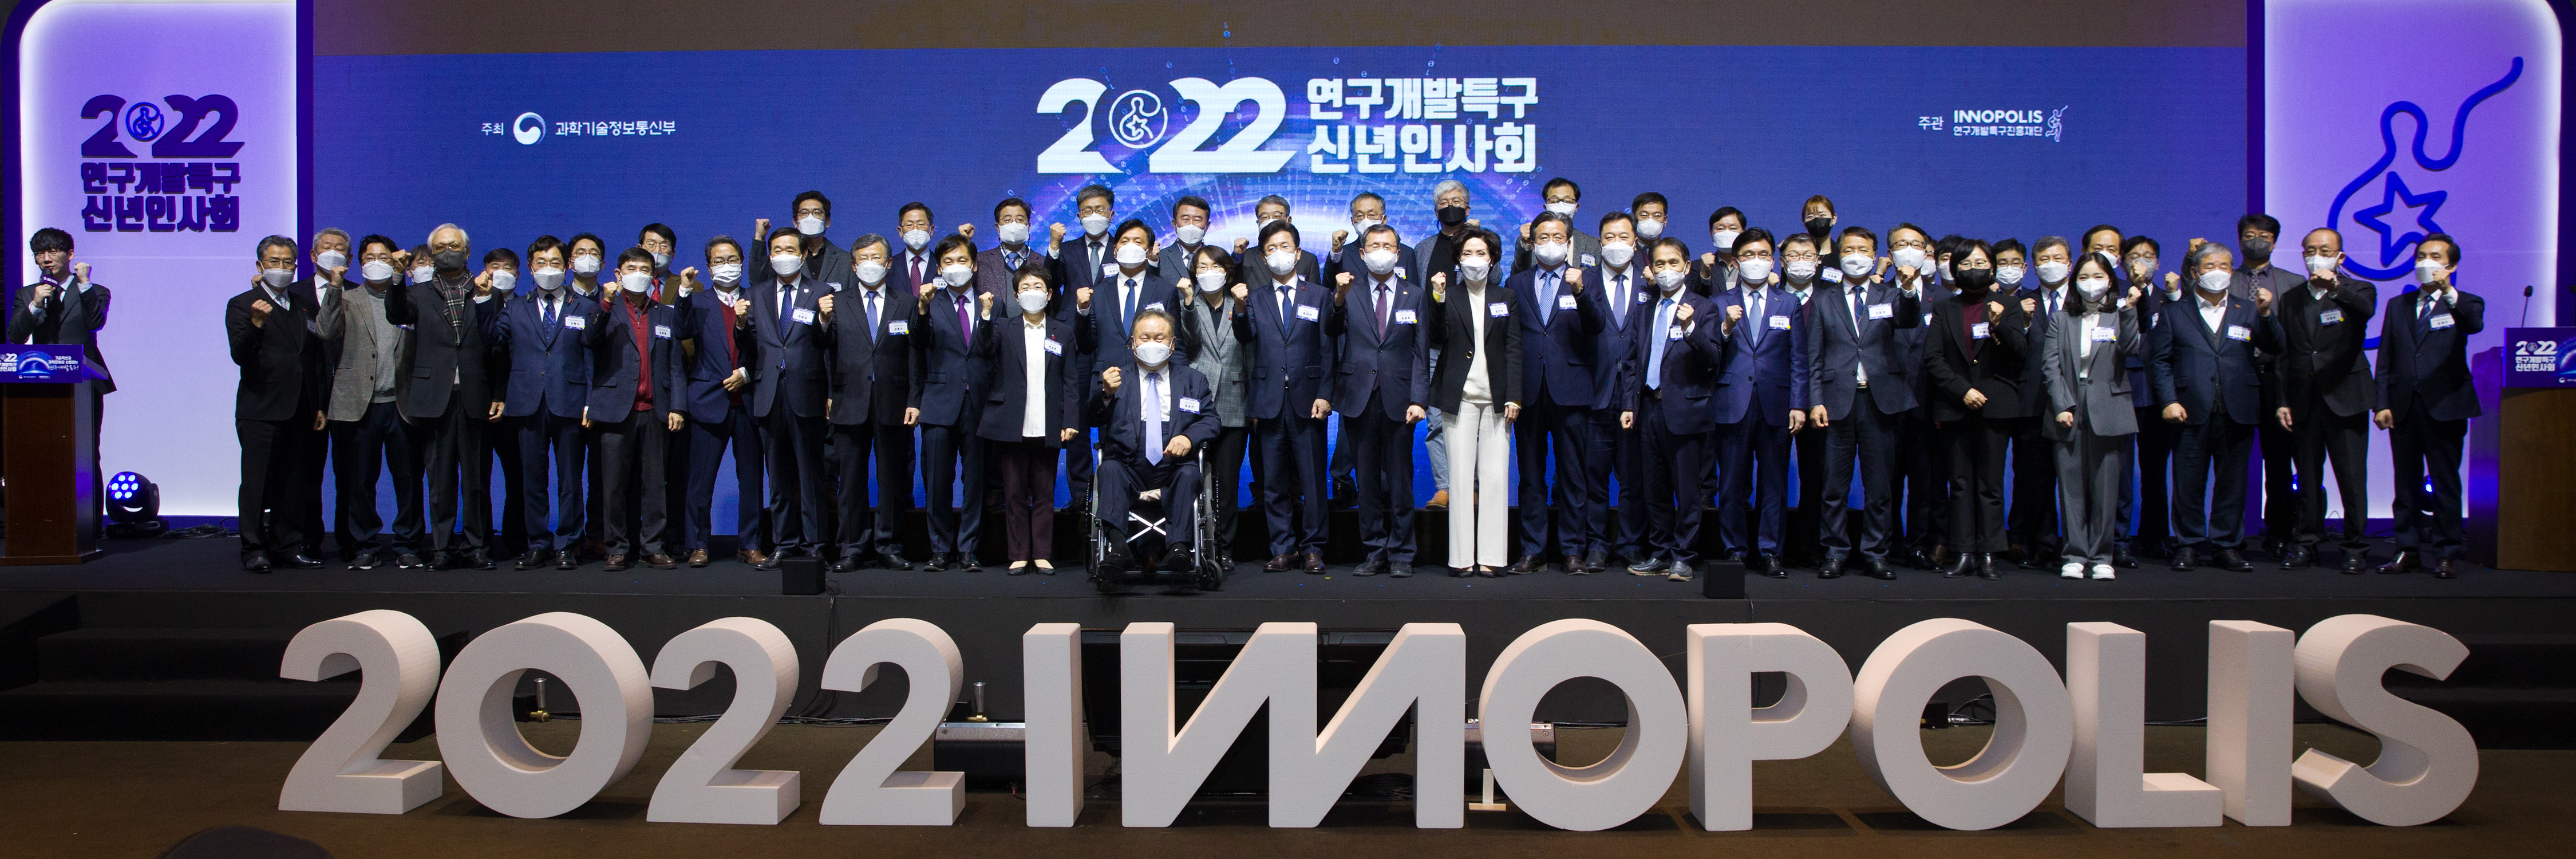 New Year Greeting of 2022 in Korea Innopolis